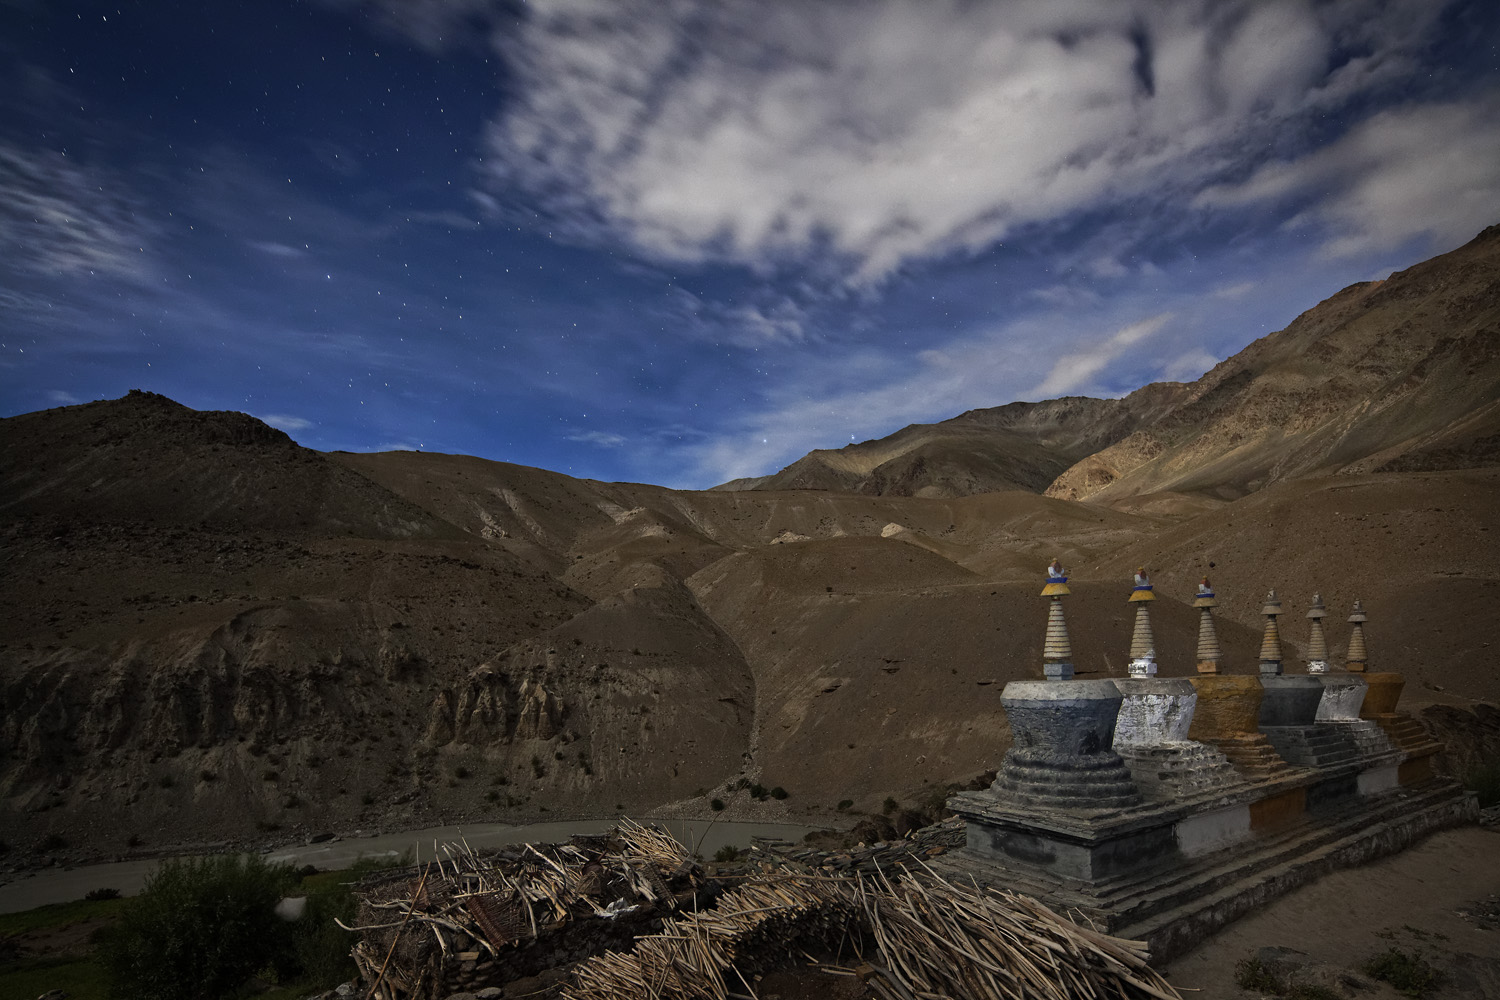 Full-moonlit night & Stupa, Purne, Zanskar, India